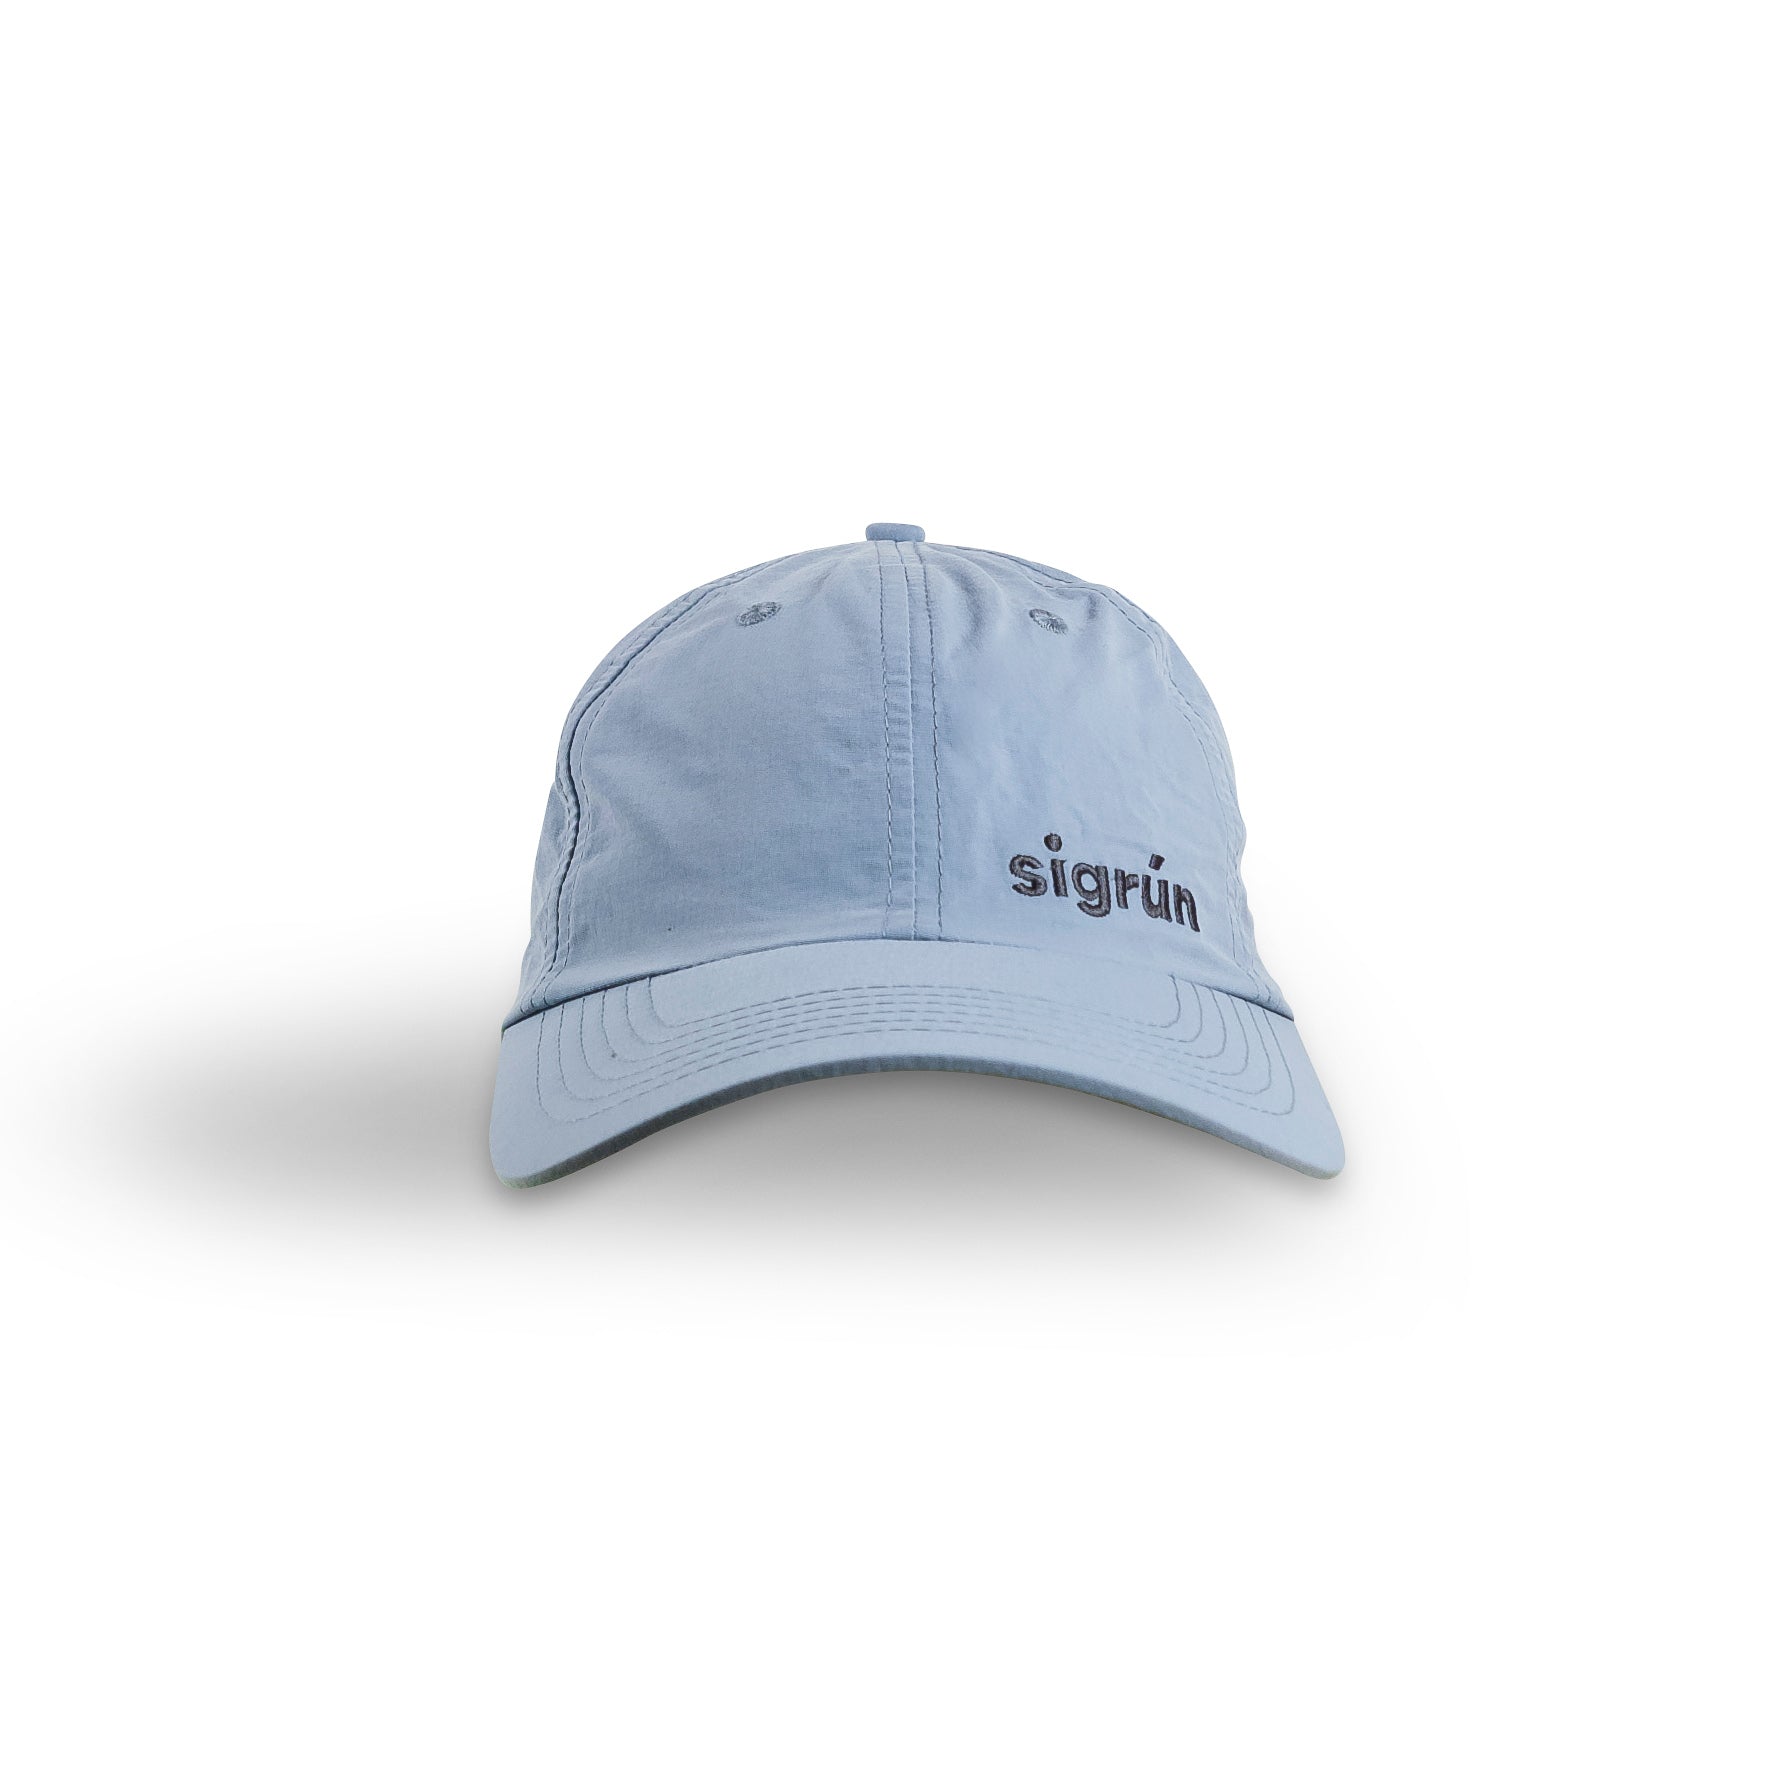 Match Performance Hat by Sigrún